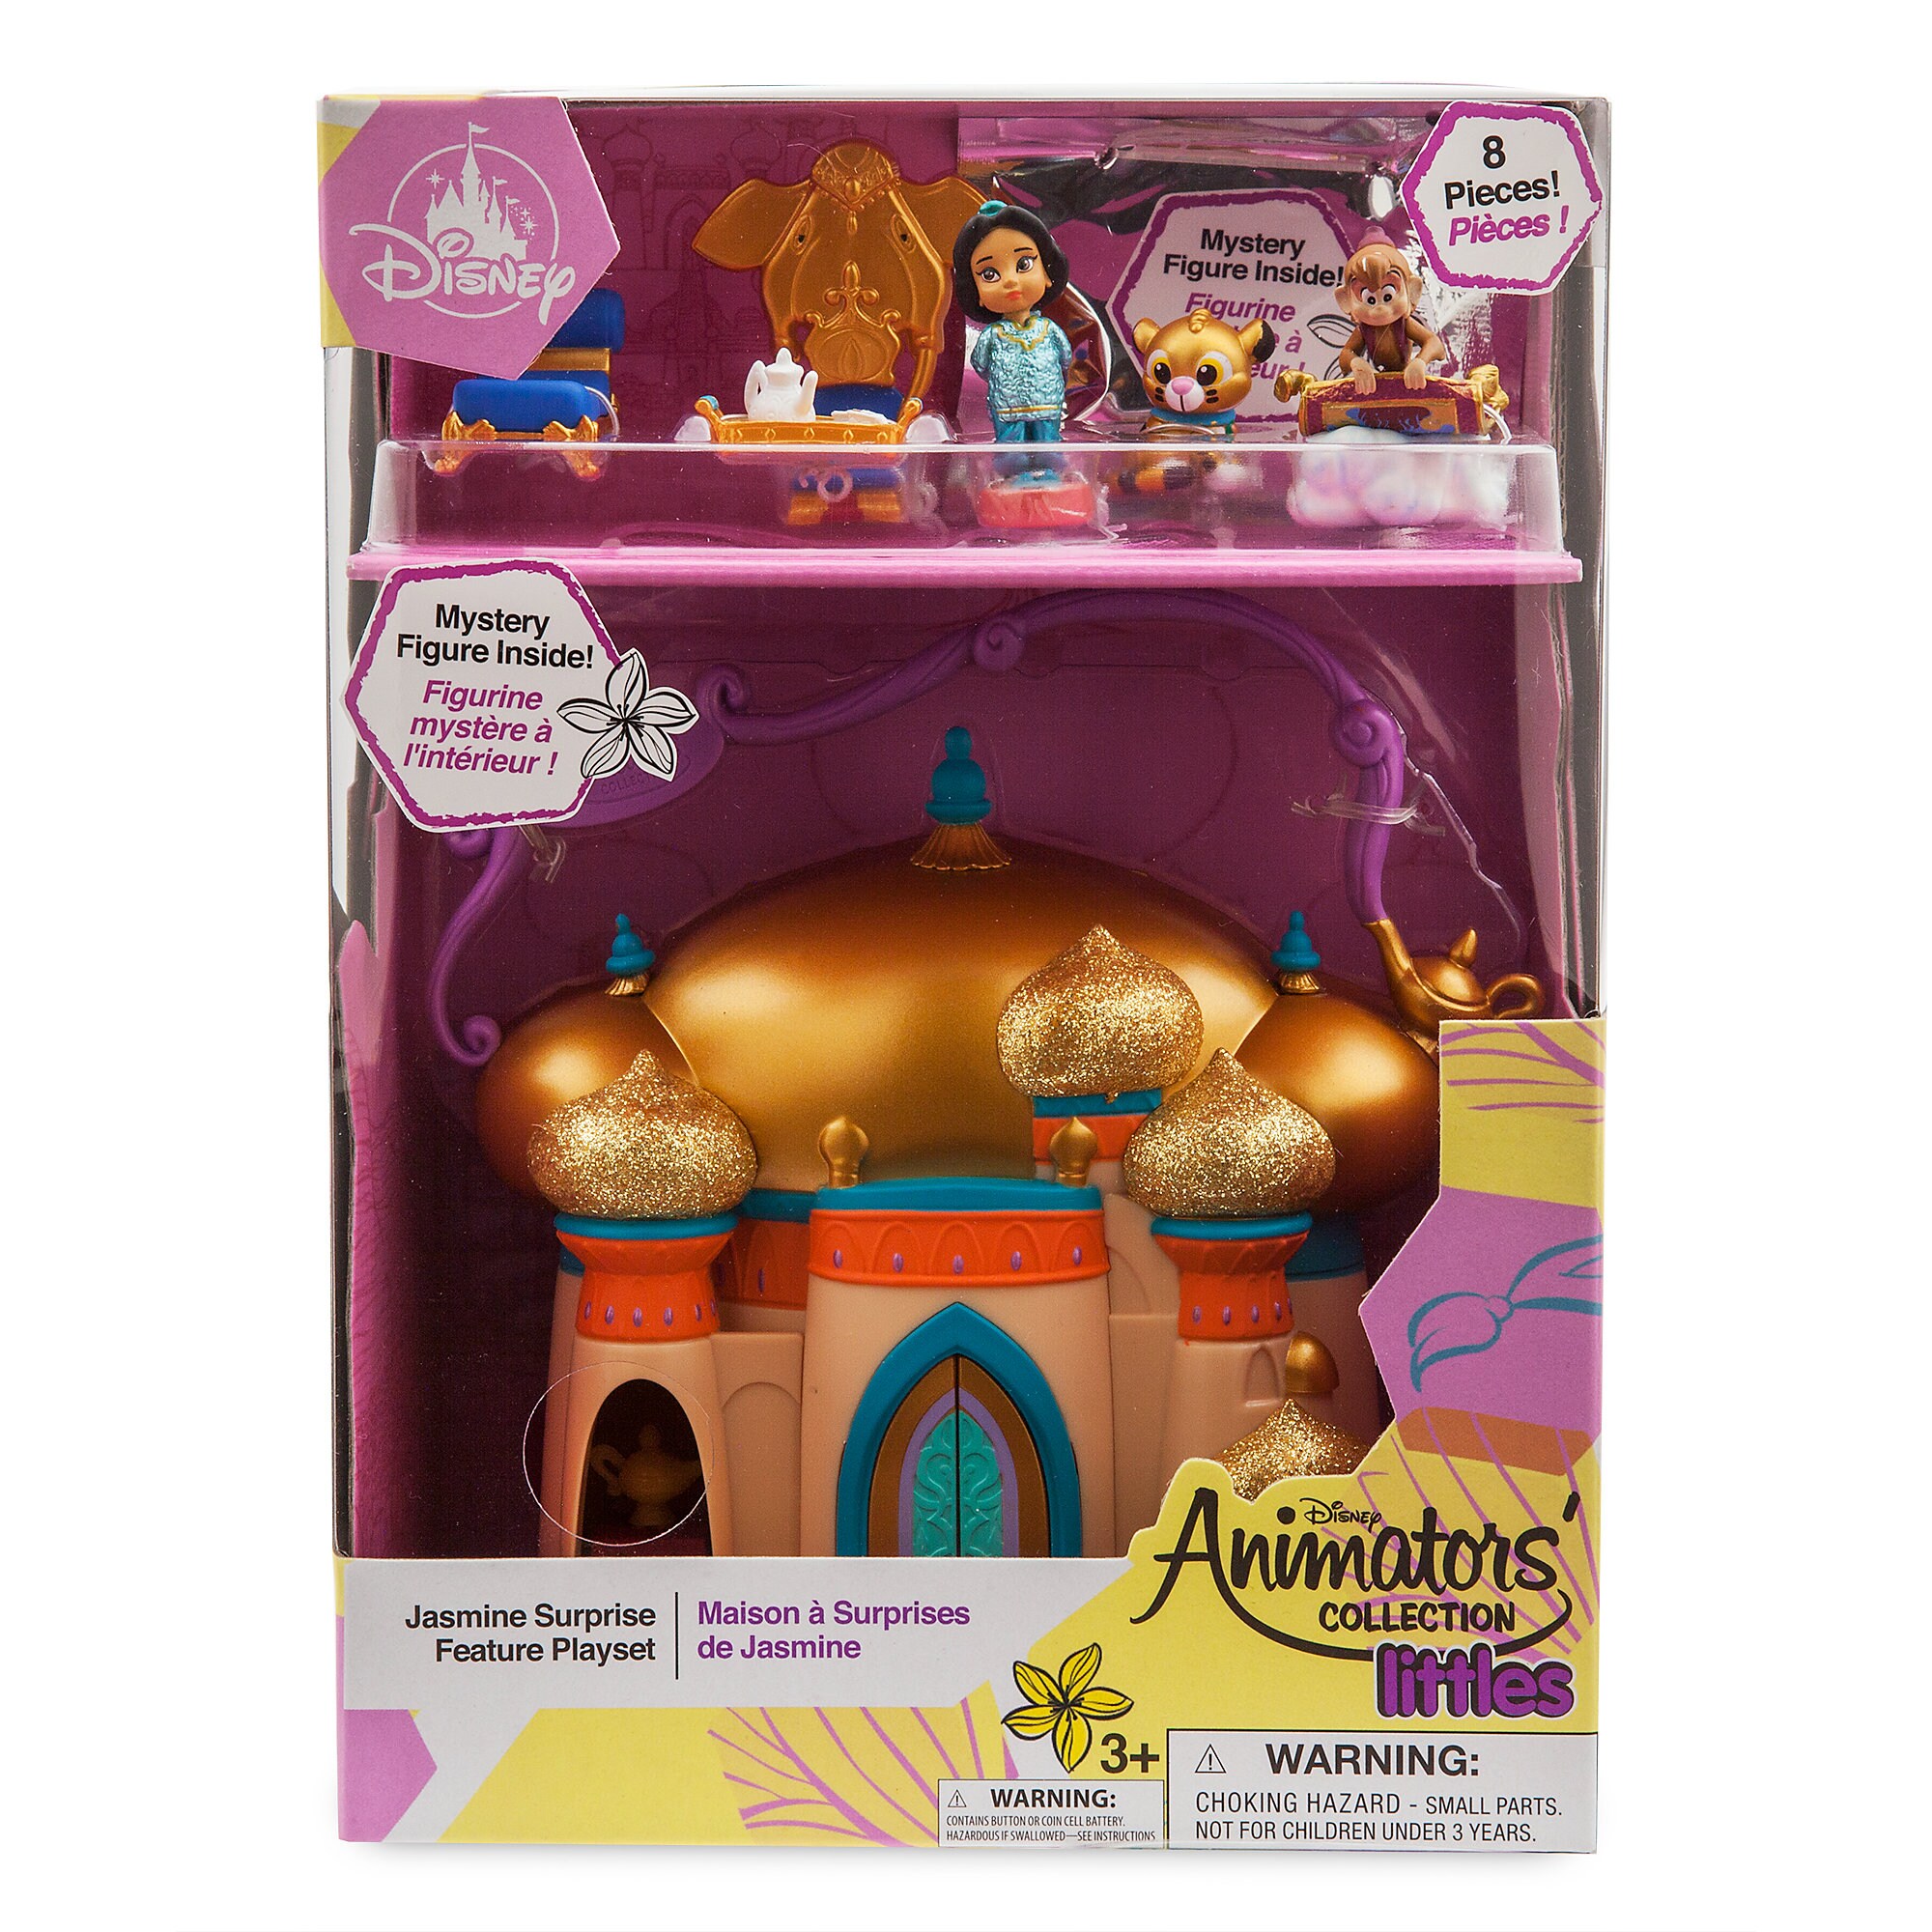 Disney Animators' Collection Littles Jasmine Surprise Feature Play Set